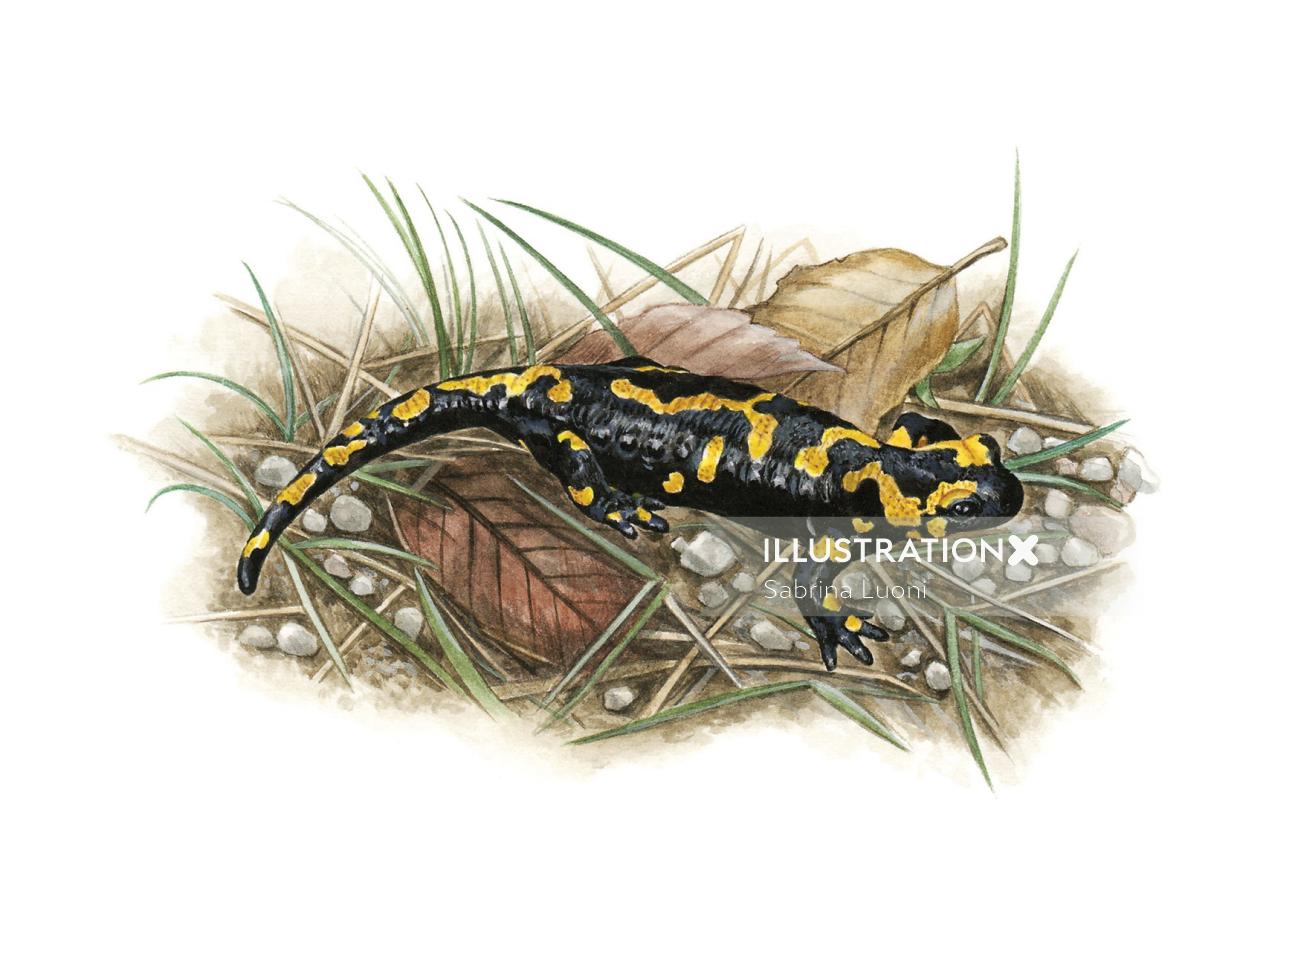 Salamandra de fuego (Salamandra salamandra)